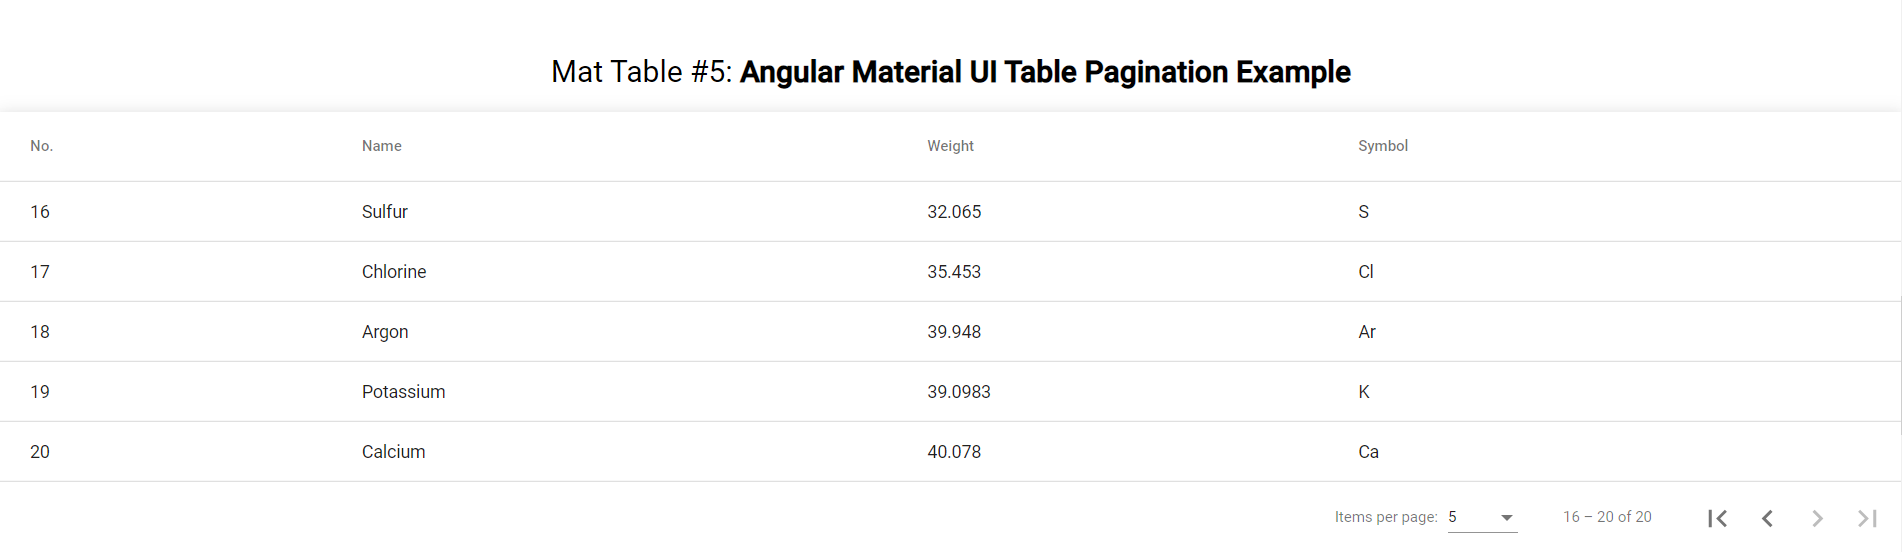 Angular Material UI Table Pagination Example